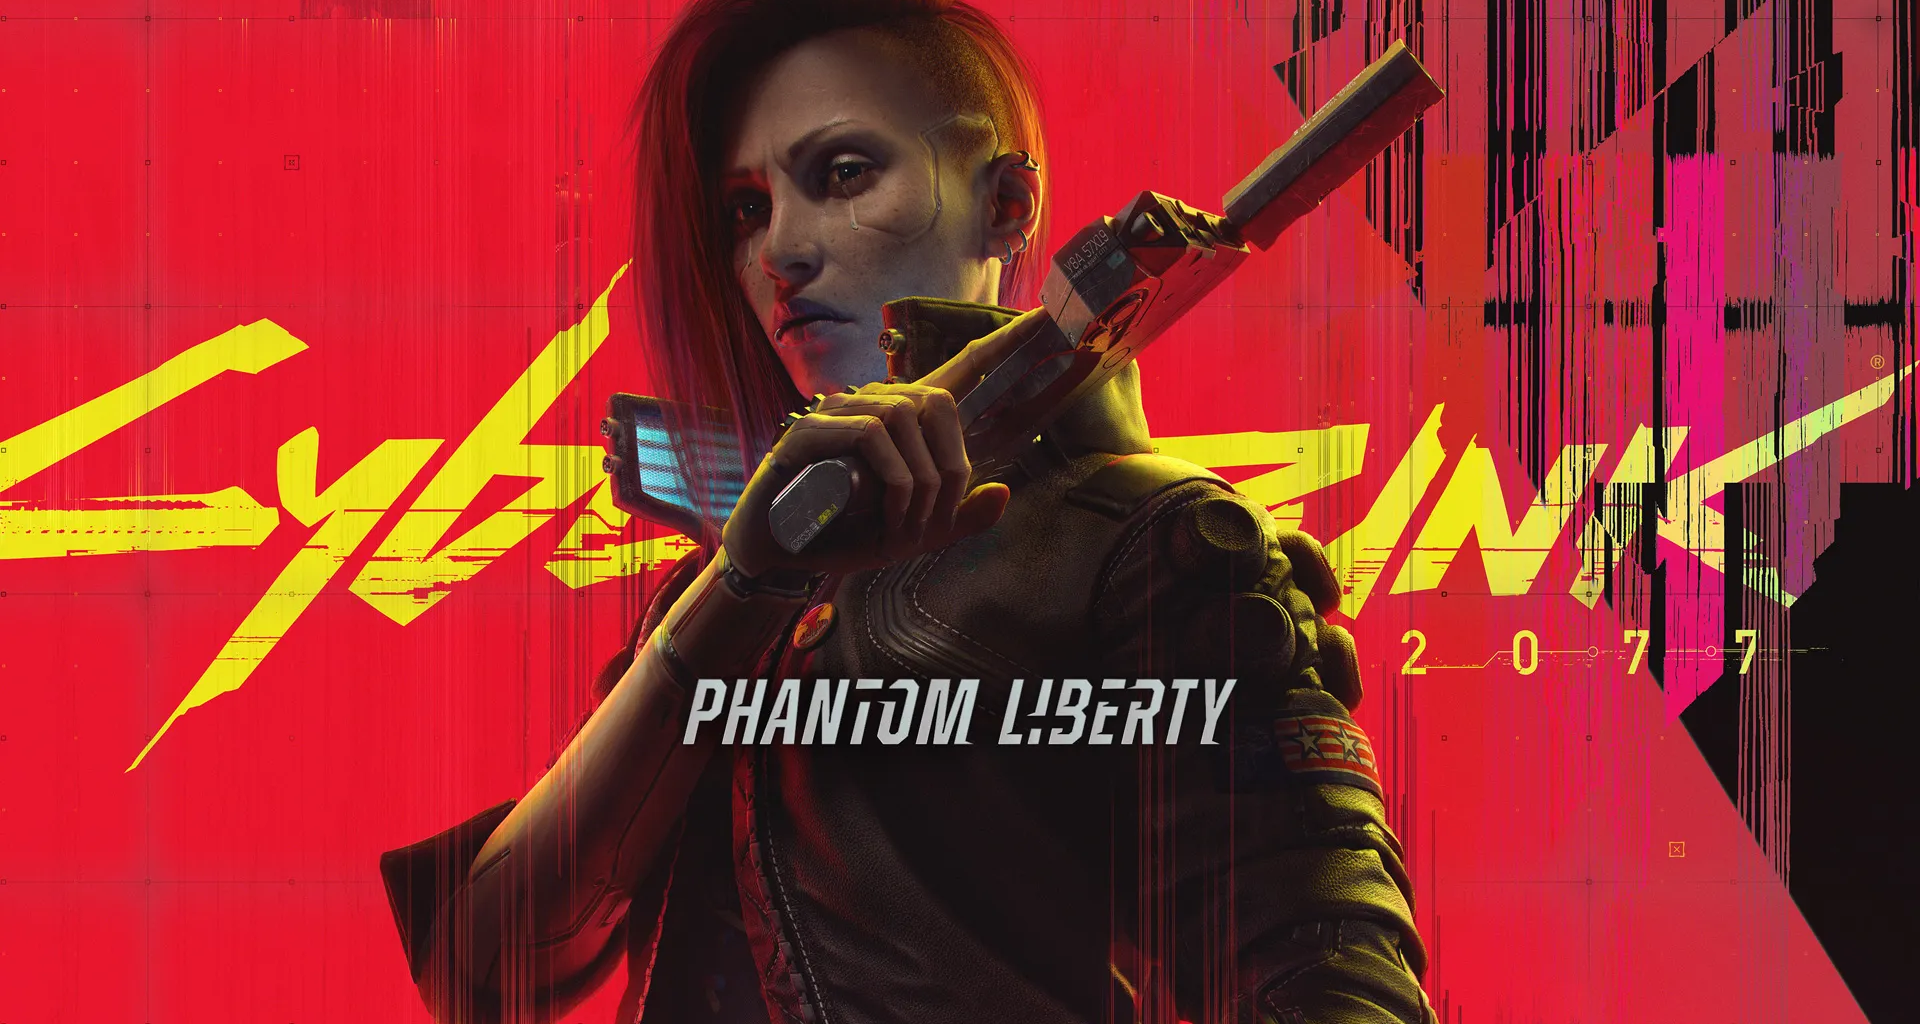 Phantom liberty, dlc de cyberpunk 2077 | trio